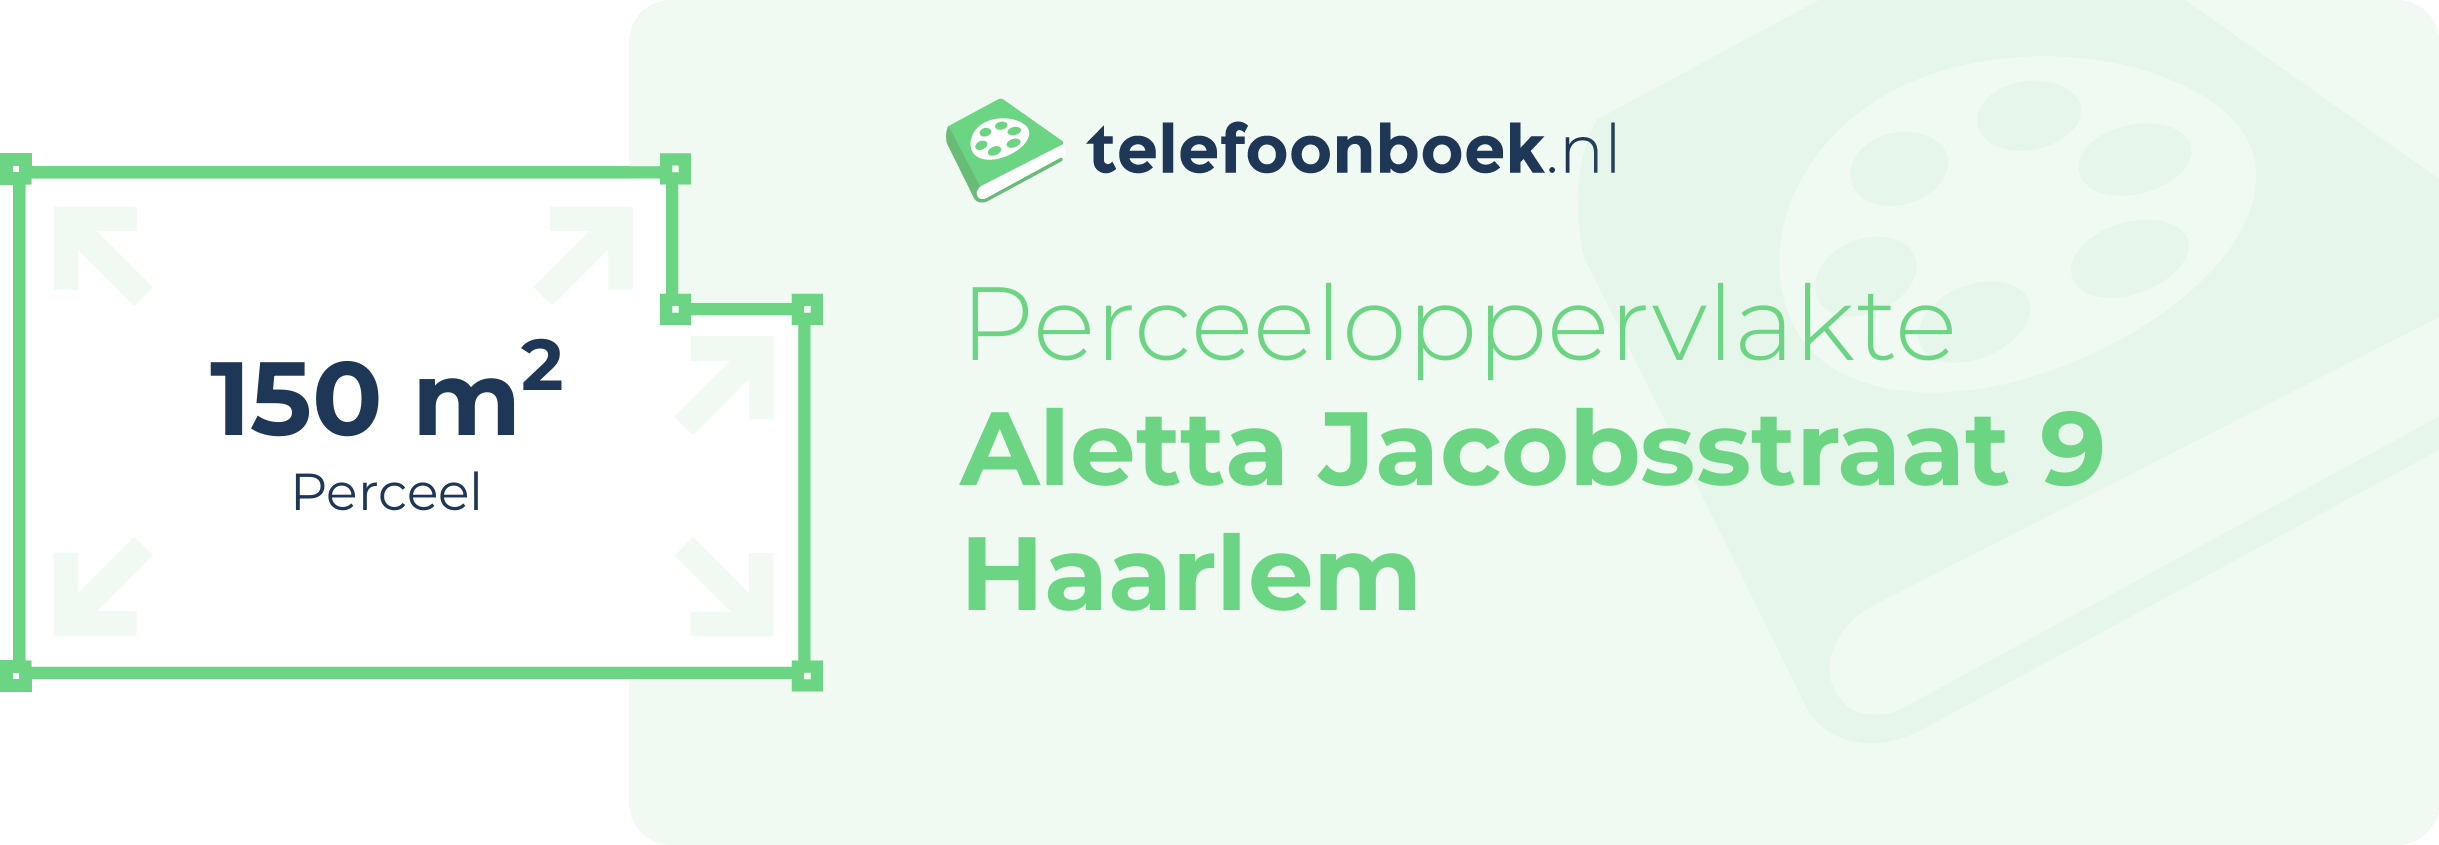 Perceeloppervlakte Aletta Jacobsstraat 9 Haarlem